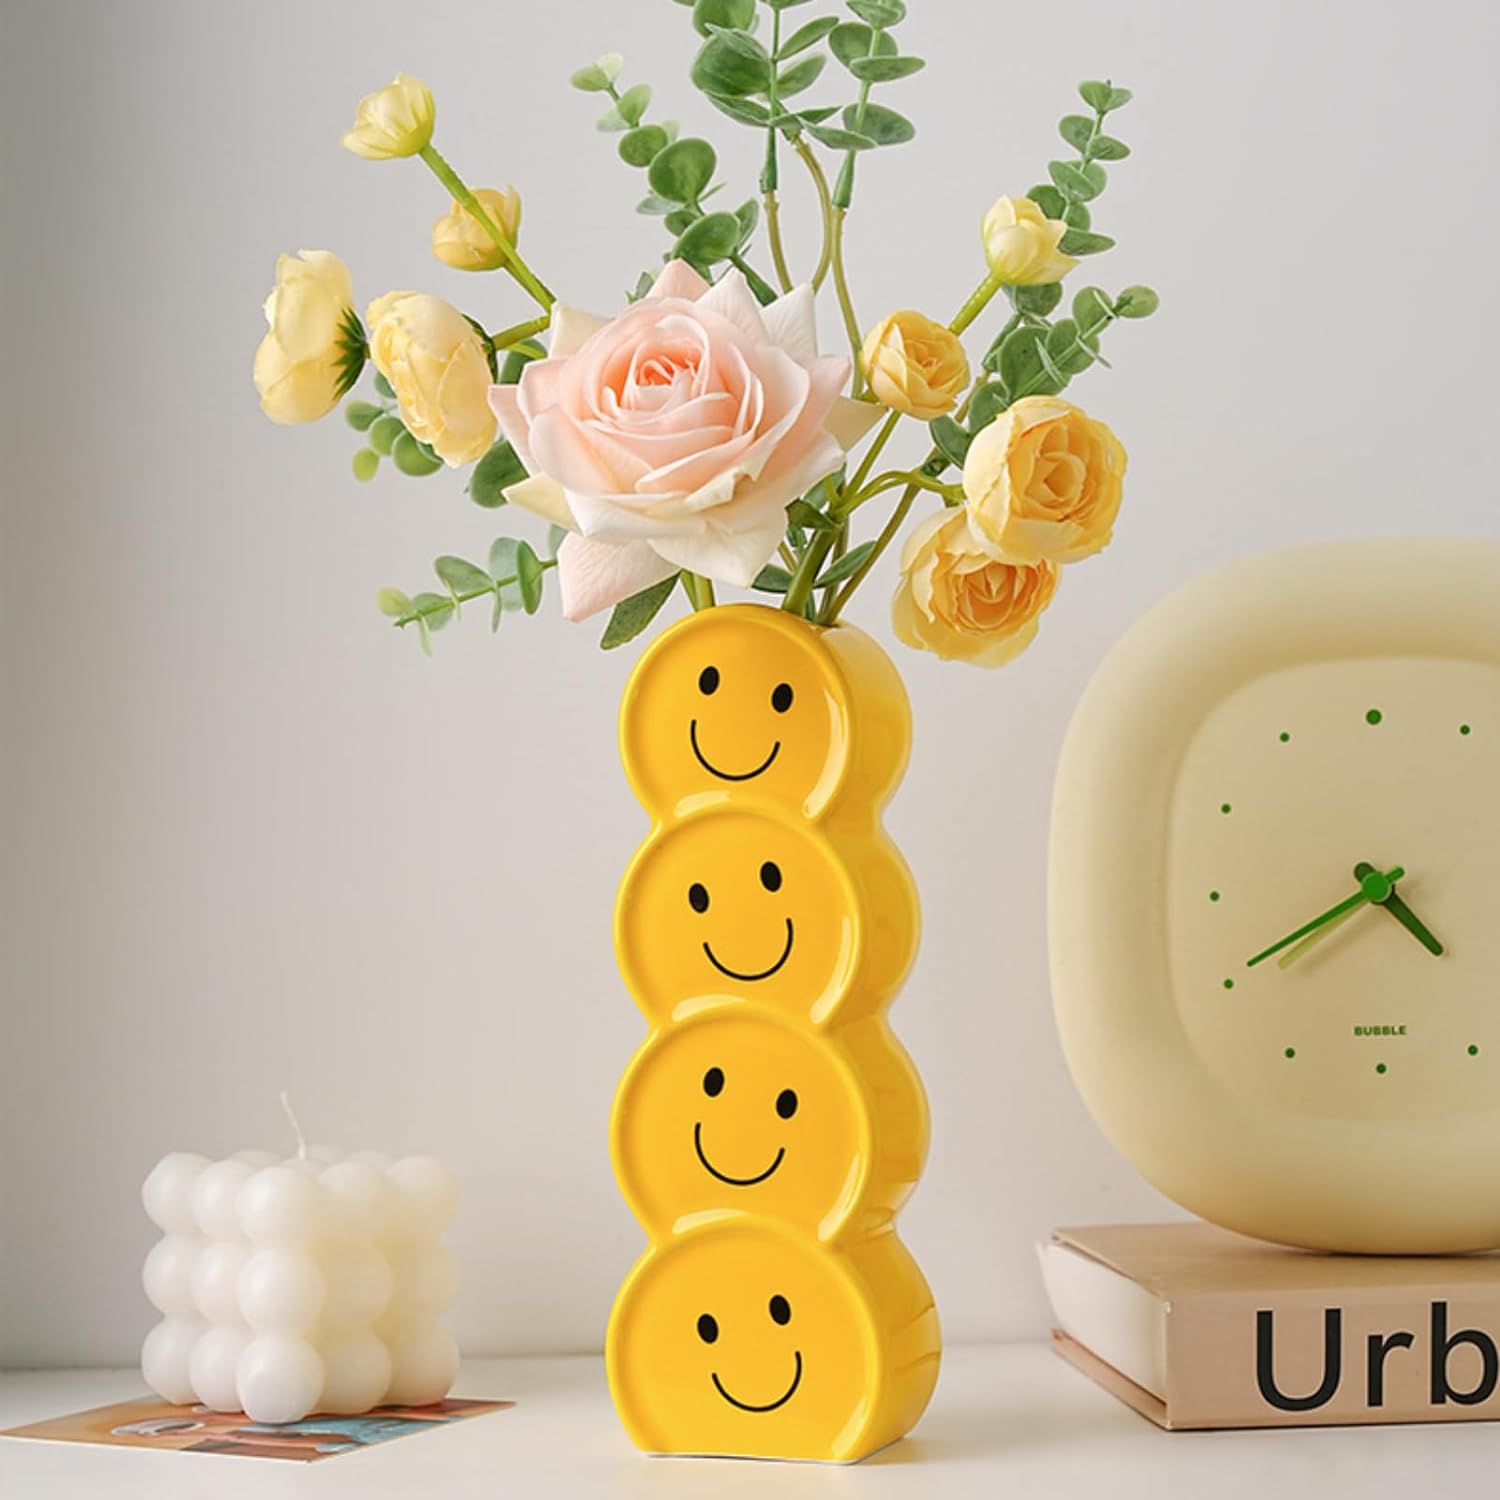 SMILING Smiling Emoji vase Handmade Pottery vase